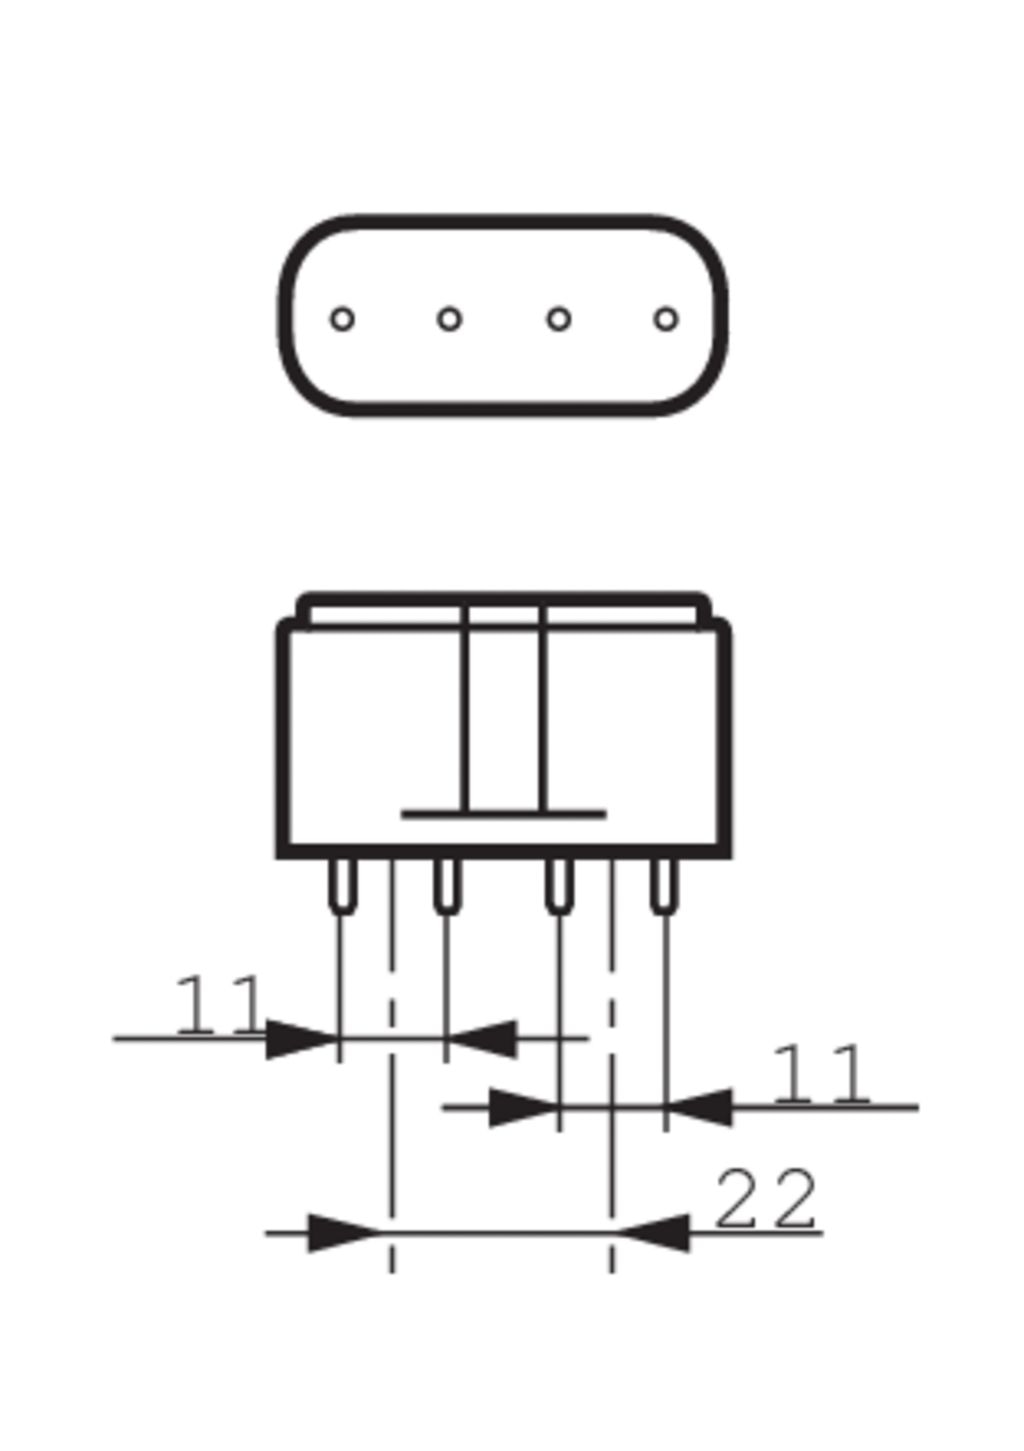 Signify UVC disinfection lamp TUV PL-L 35W/4P HO 1CT/25 (TUV PL-L series)